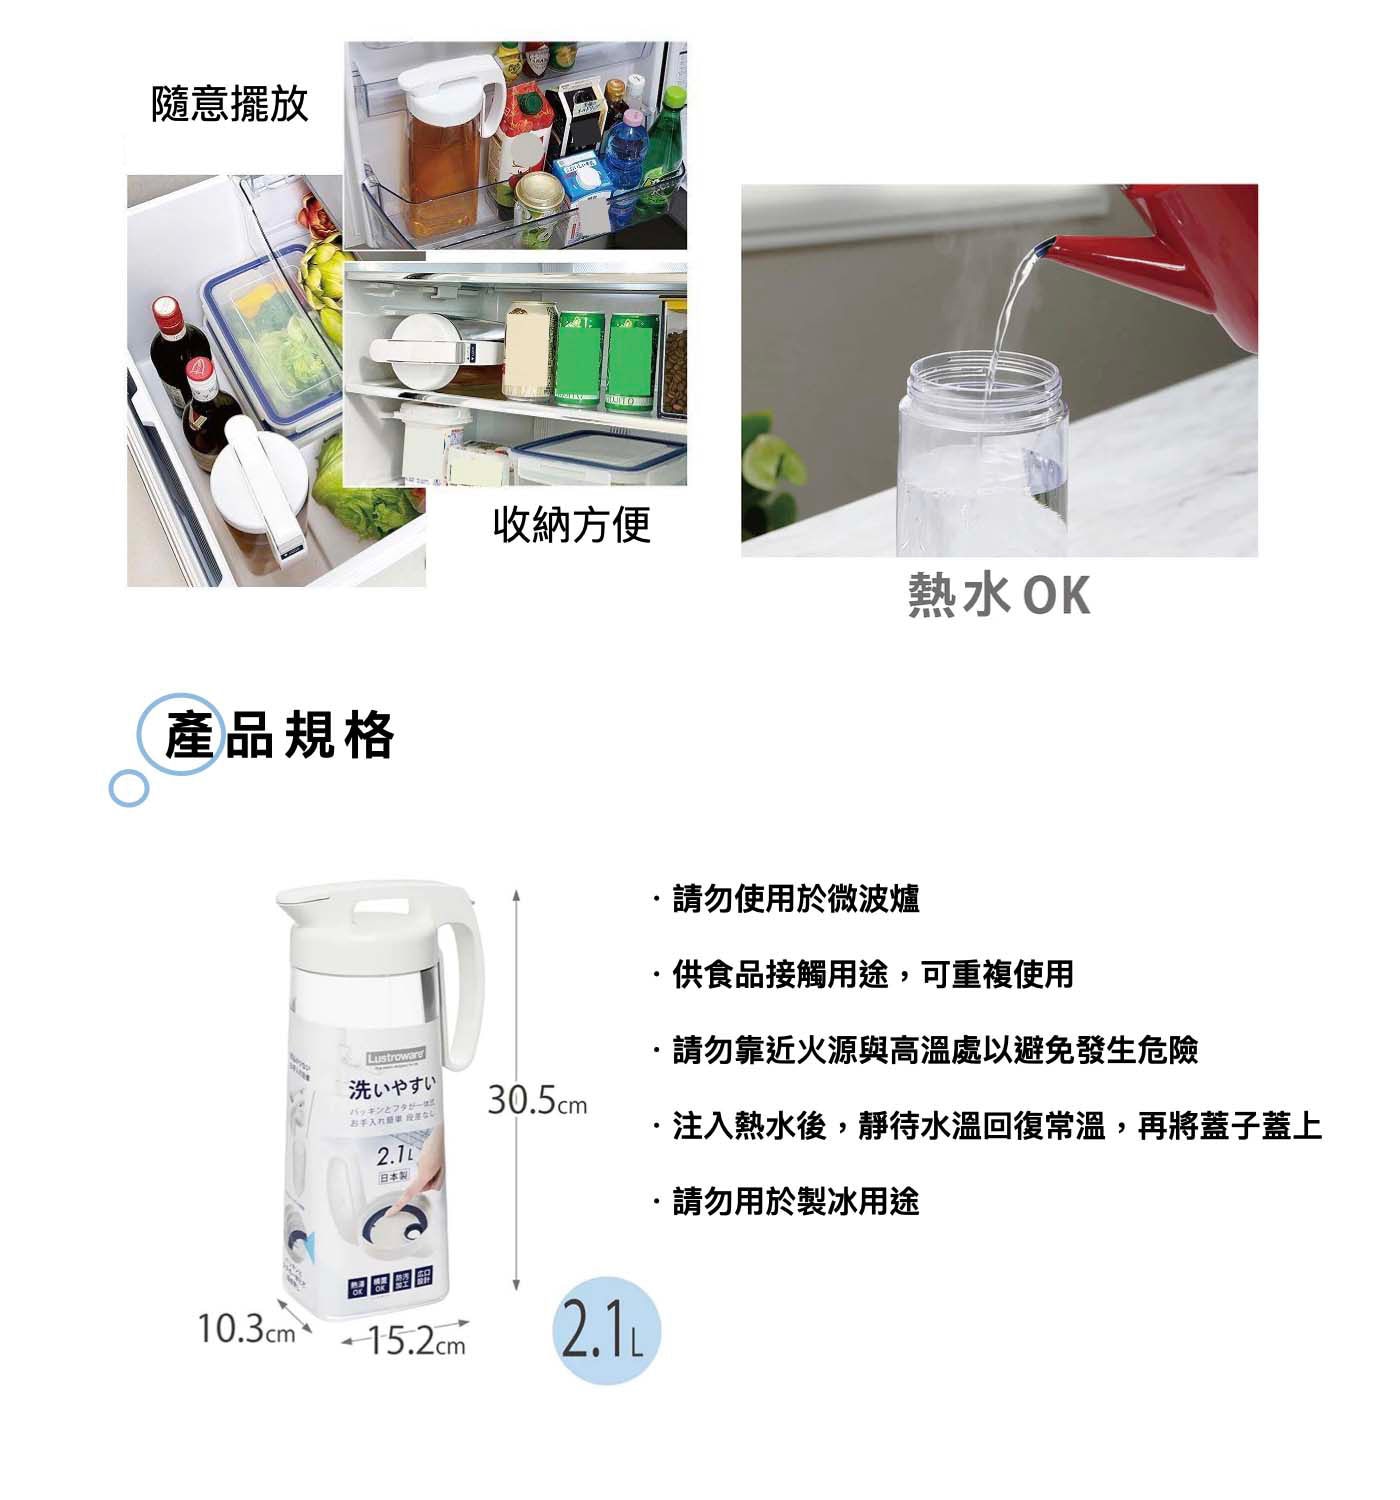 Lustroware 日本岩崎耐熱冷/熱水壺 2.1公升採用AS環保樹脂原料,環保無毒,密封性佳,平放也OK,日本原裝進口。